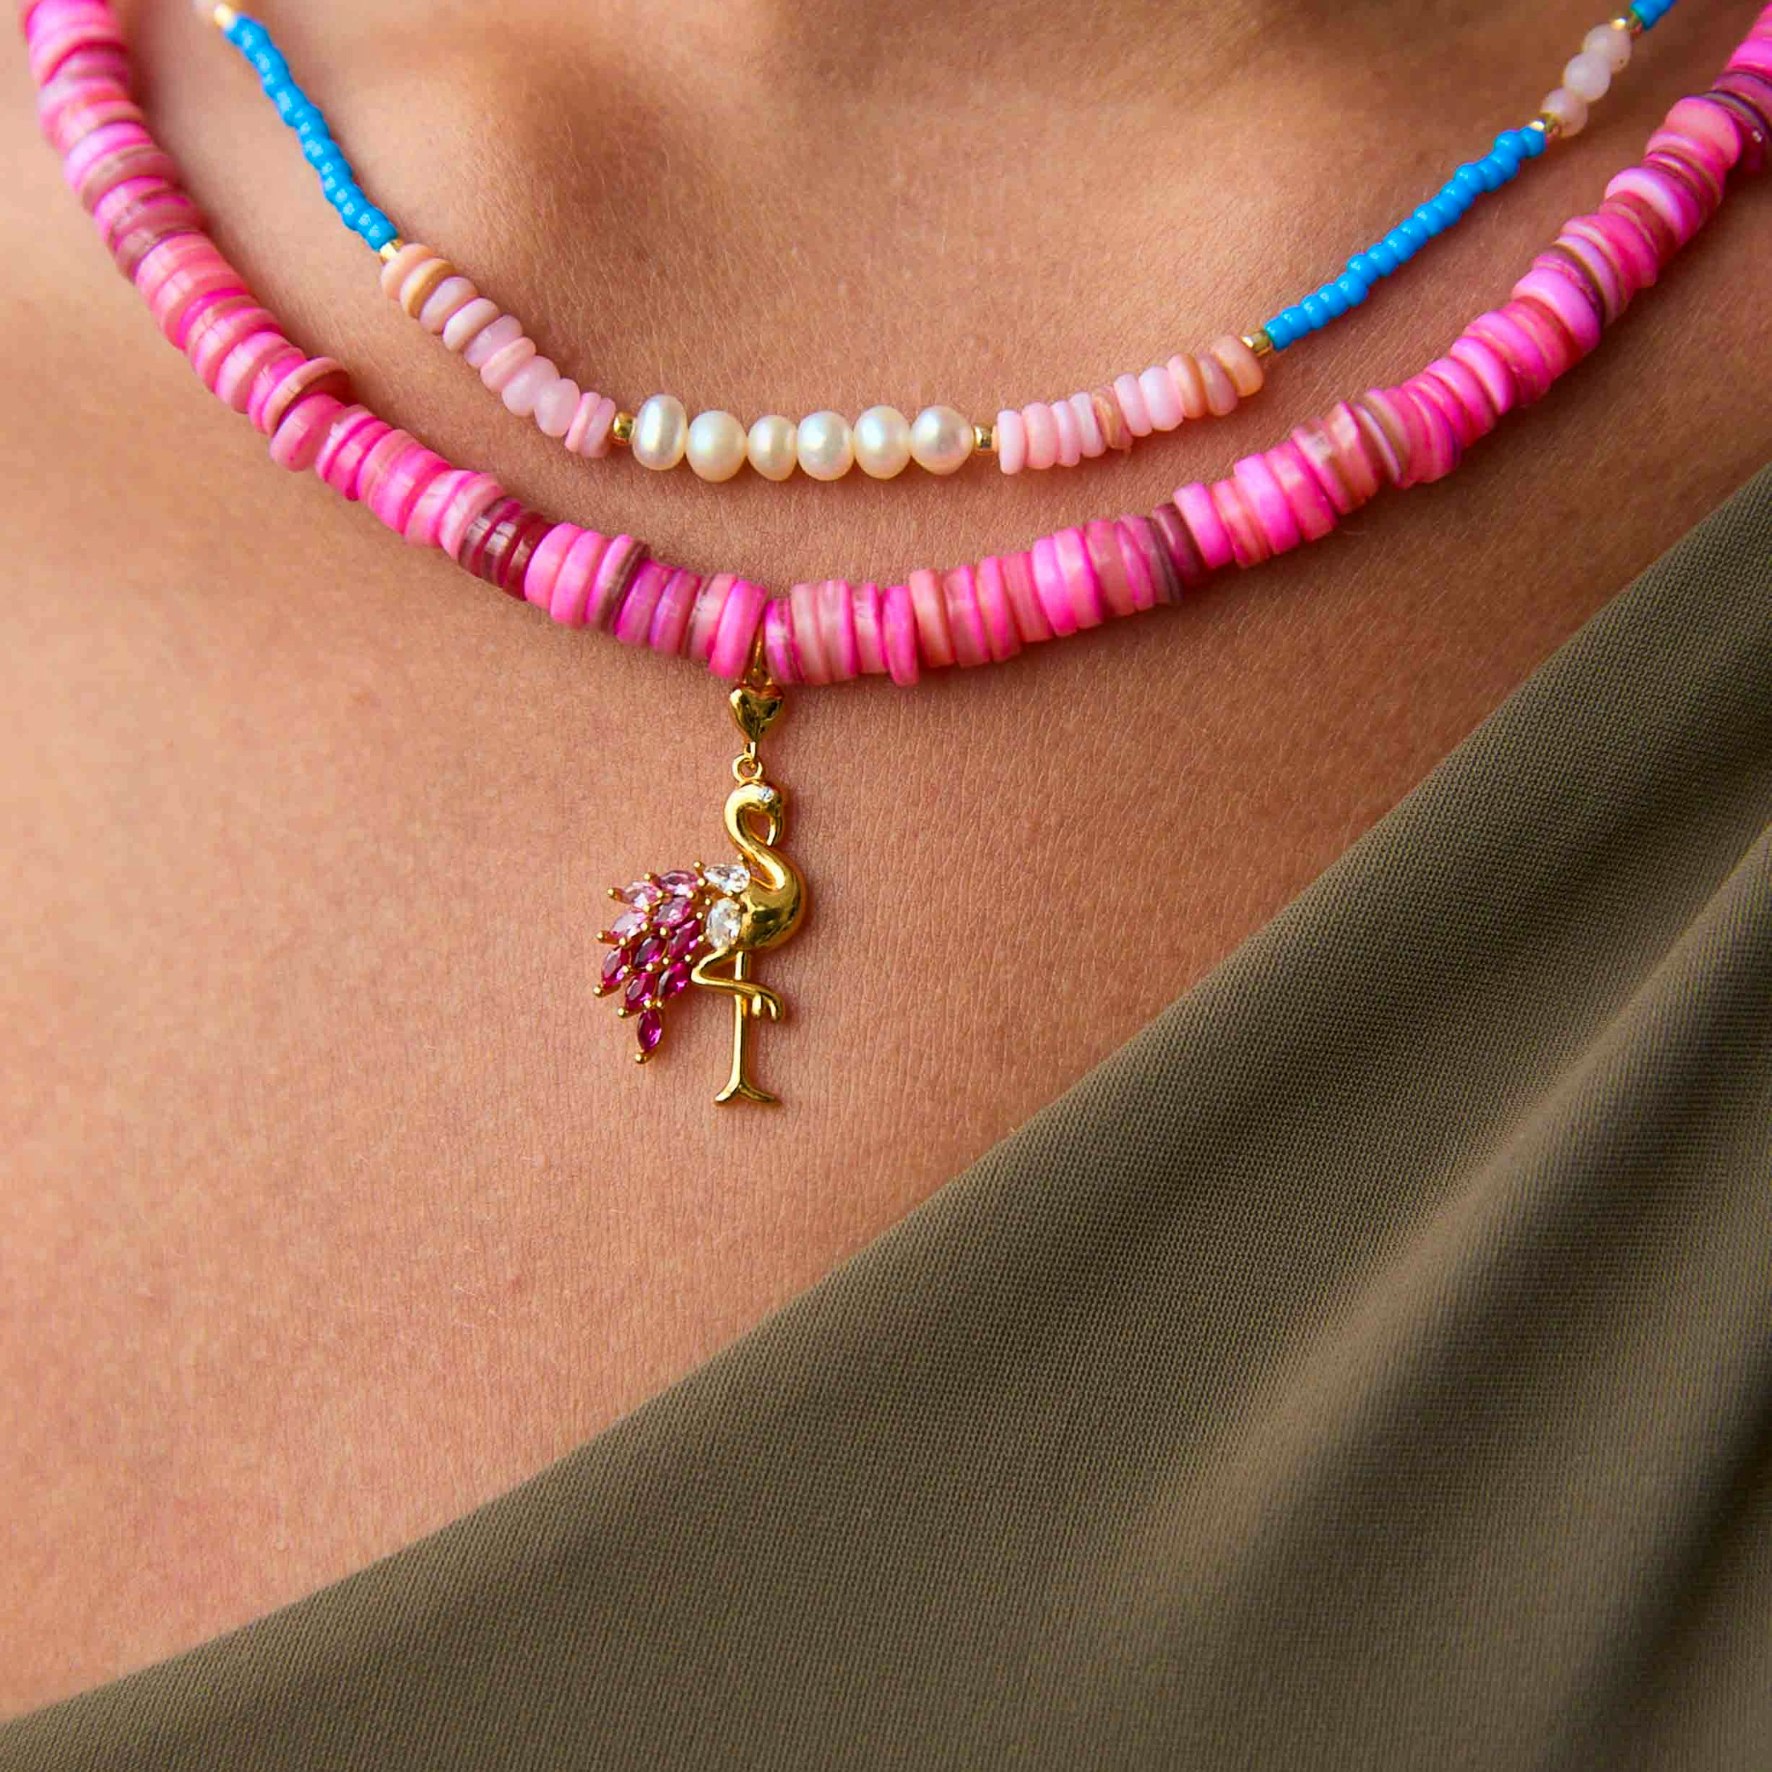 Pink Flamingo Necklace